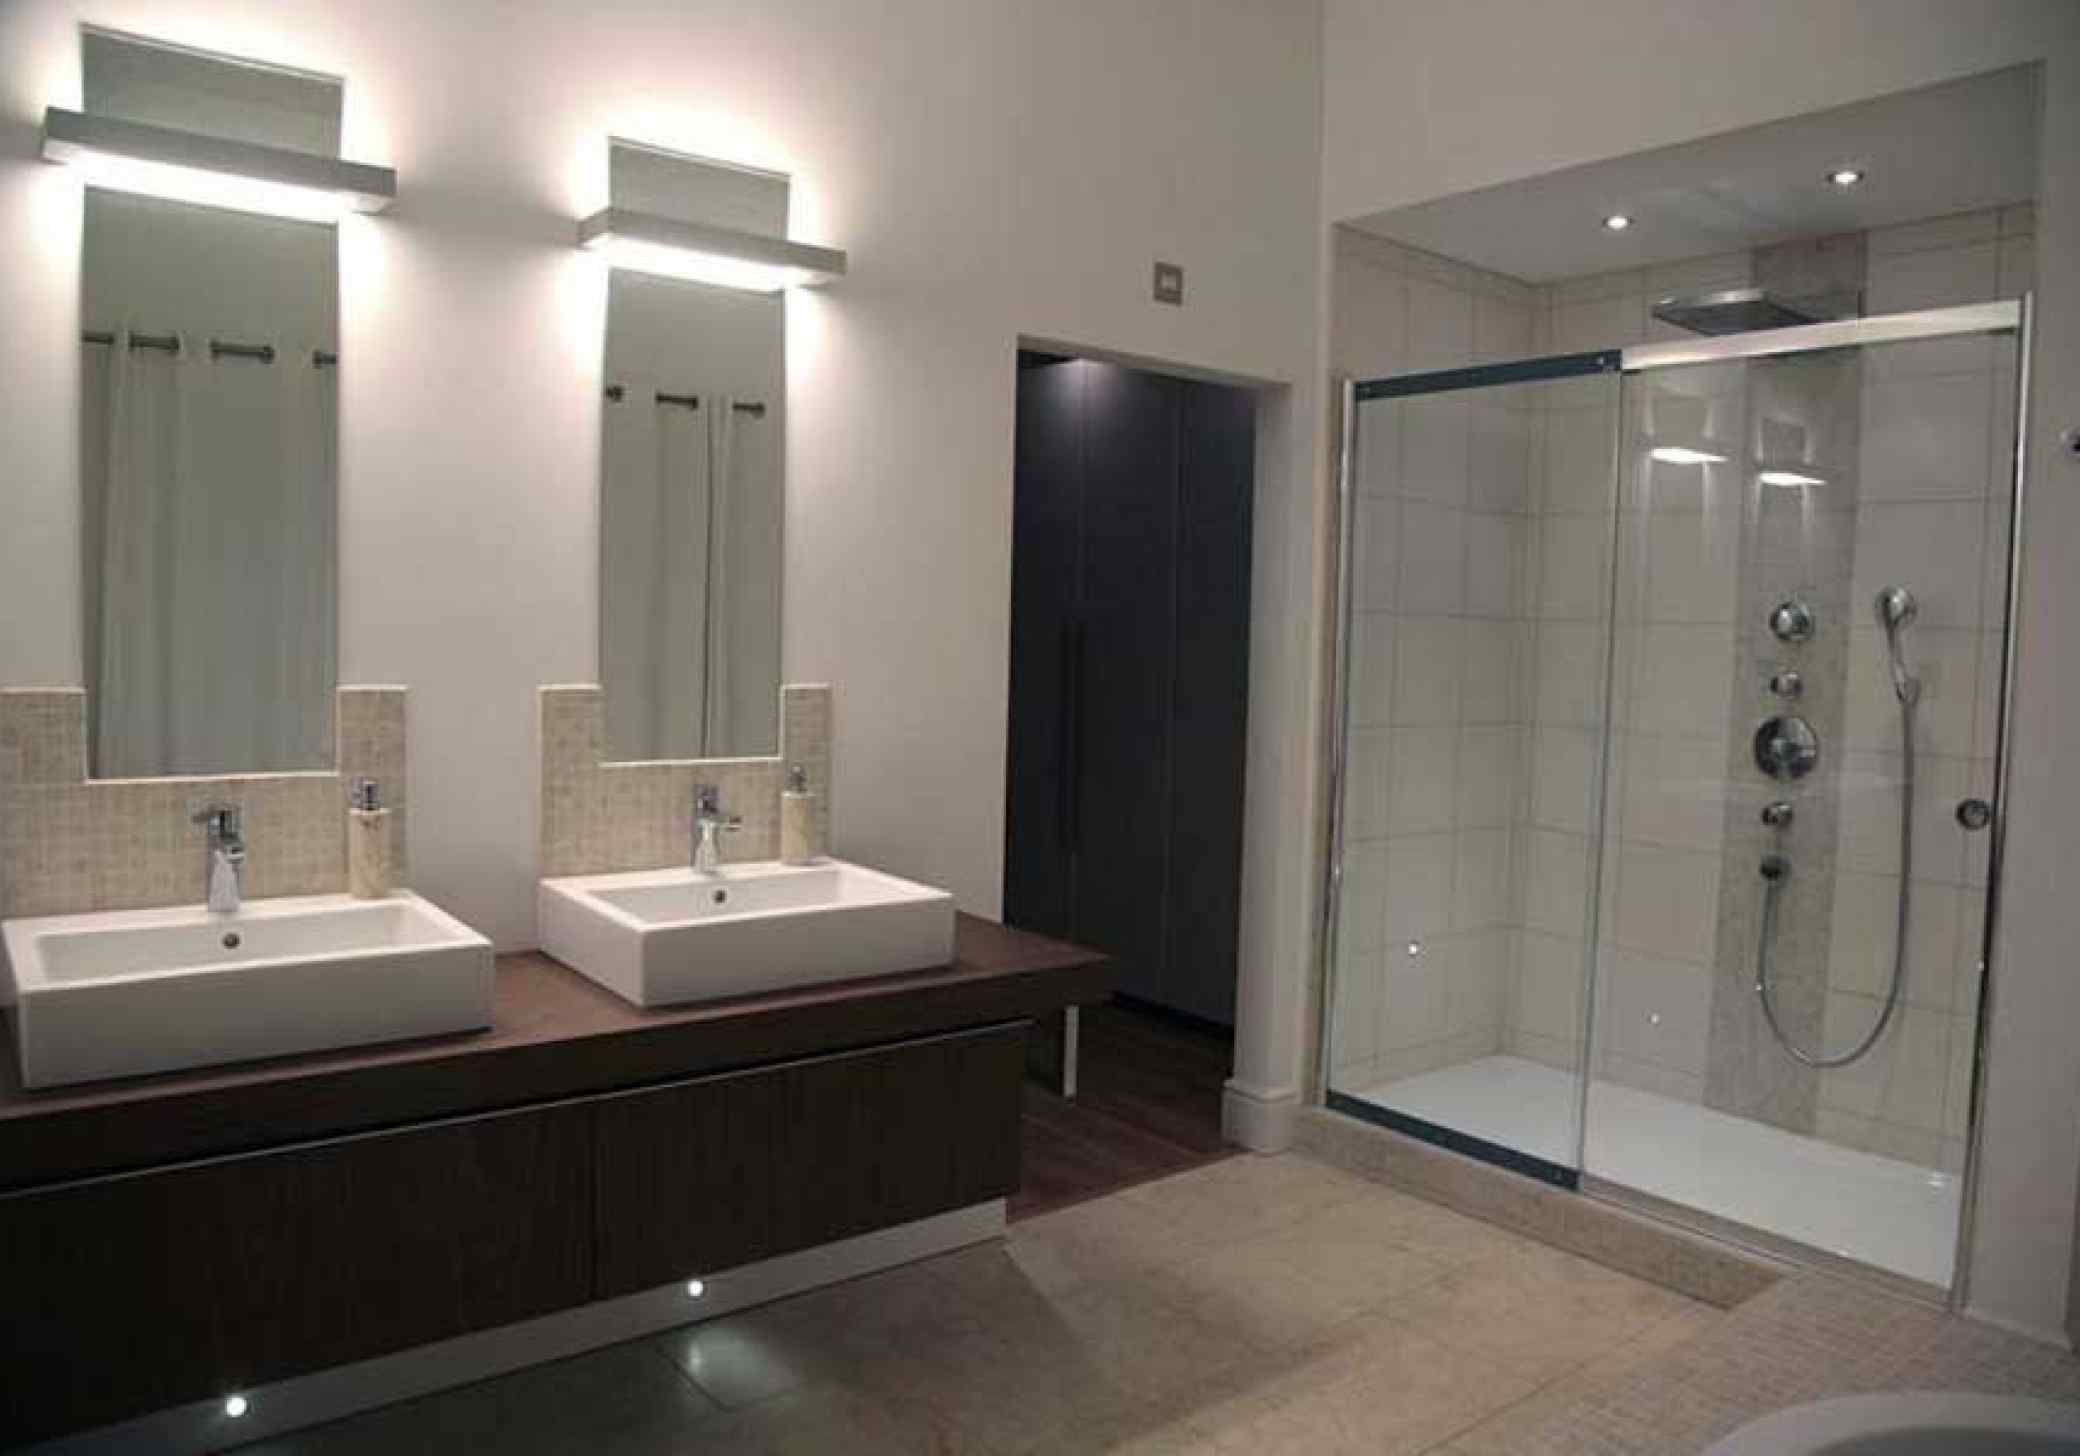 Carden Cheshire contemporary bathroom design